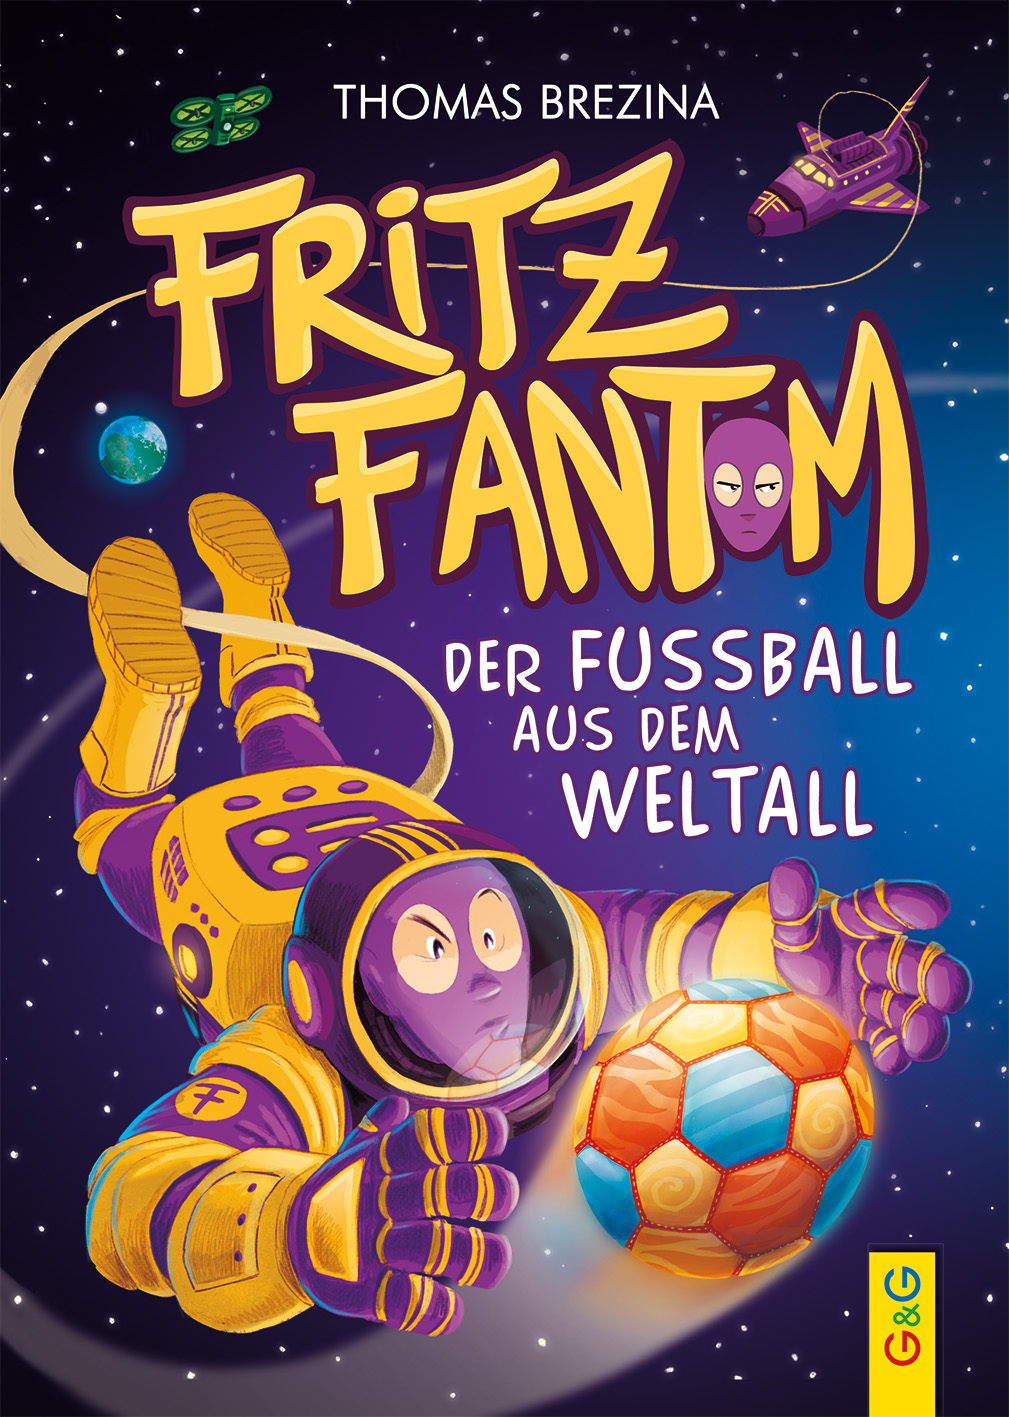 14,00€ Fritz Fantom - der Fußball aus dem Weltall